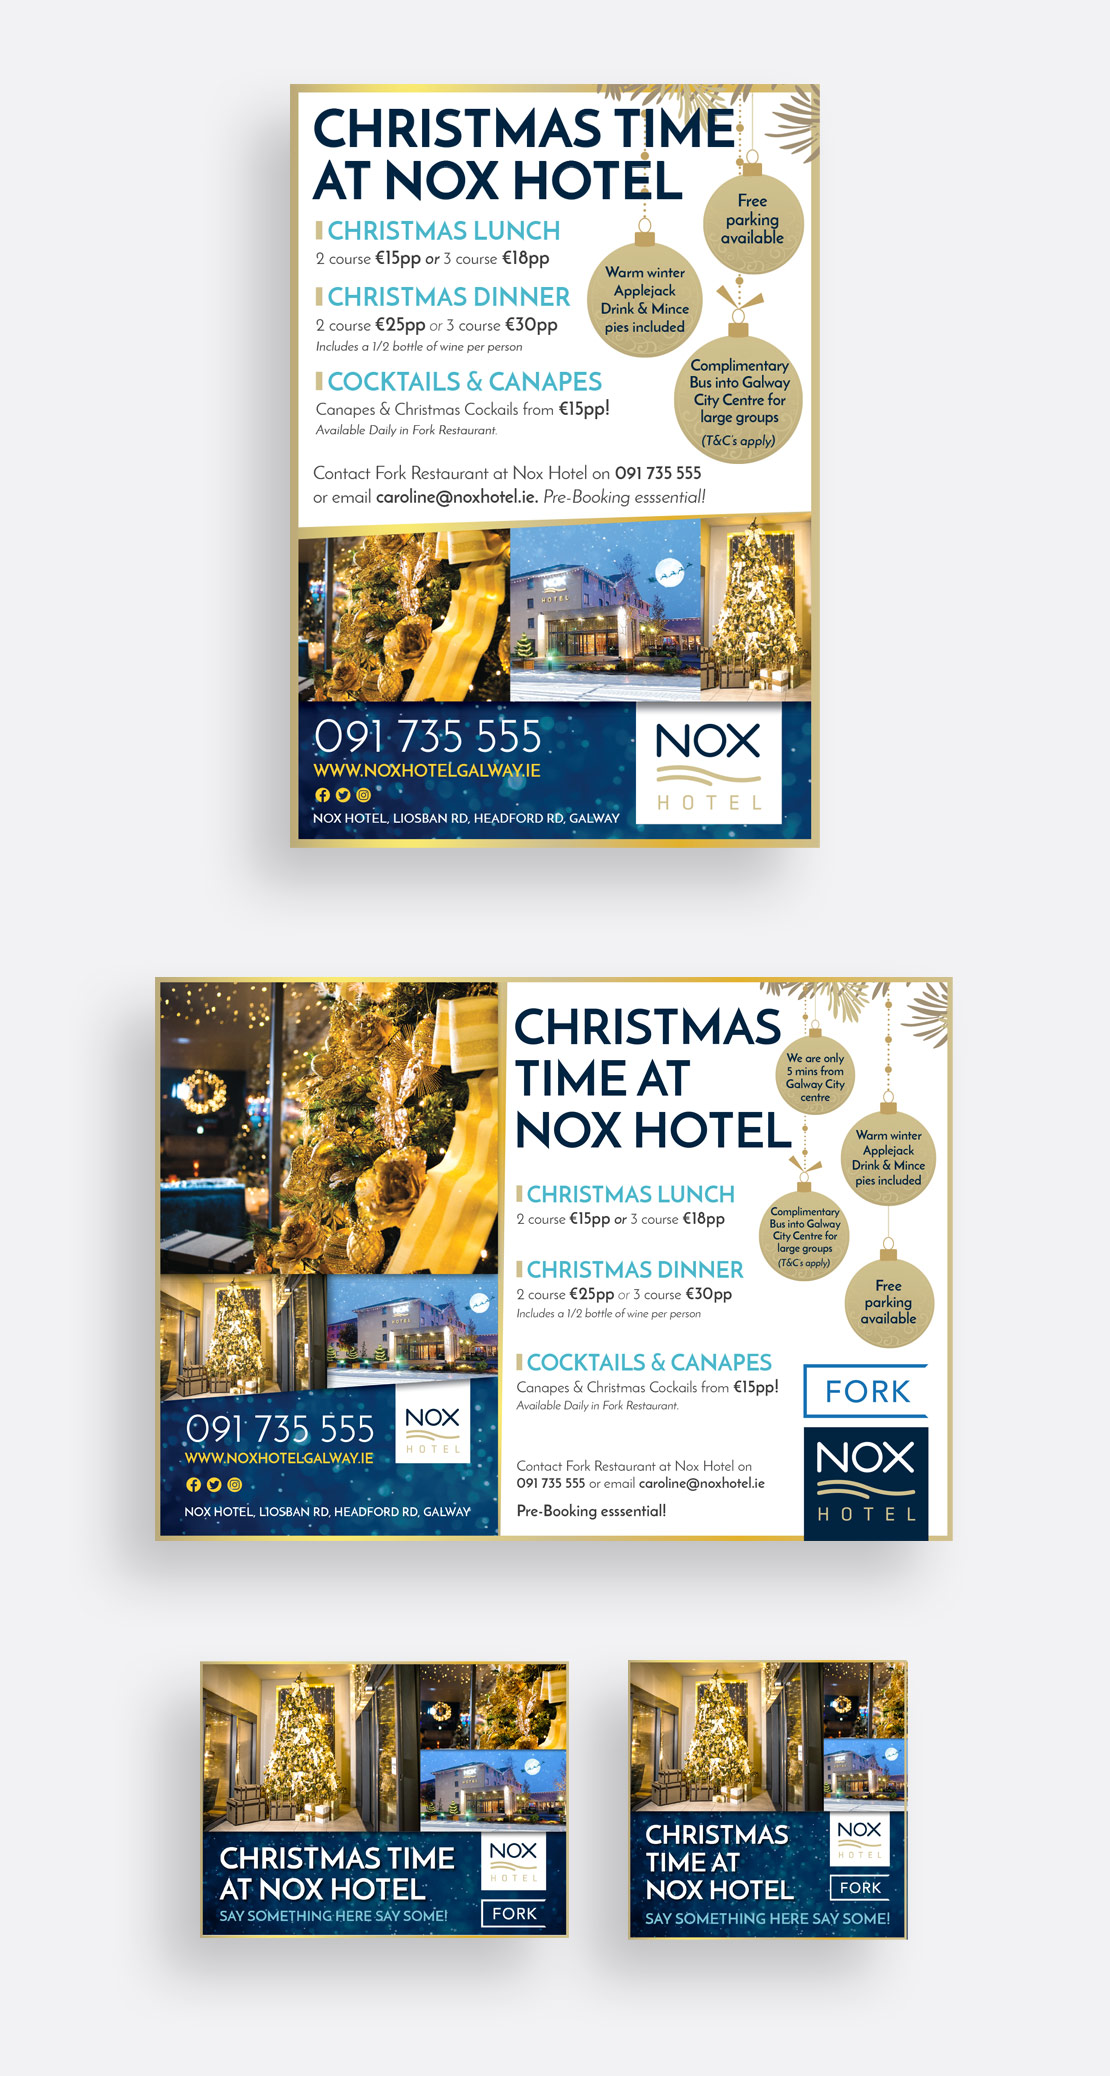 Nox Hotel Christmas 2017 print and social media campaign